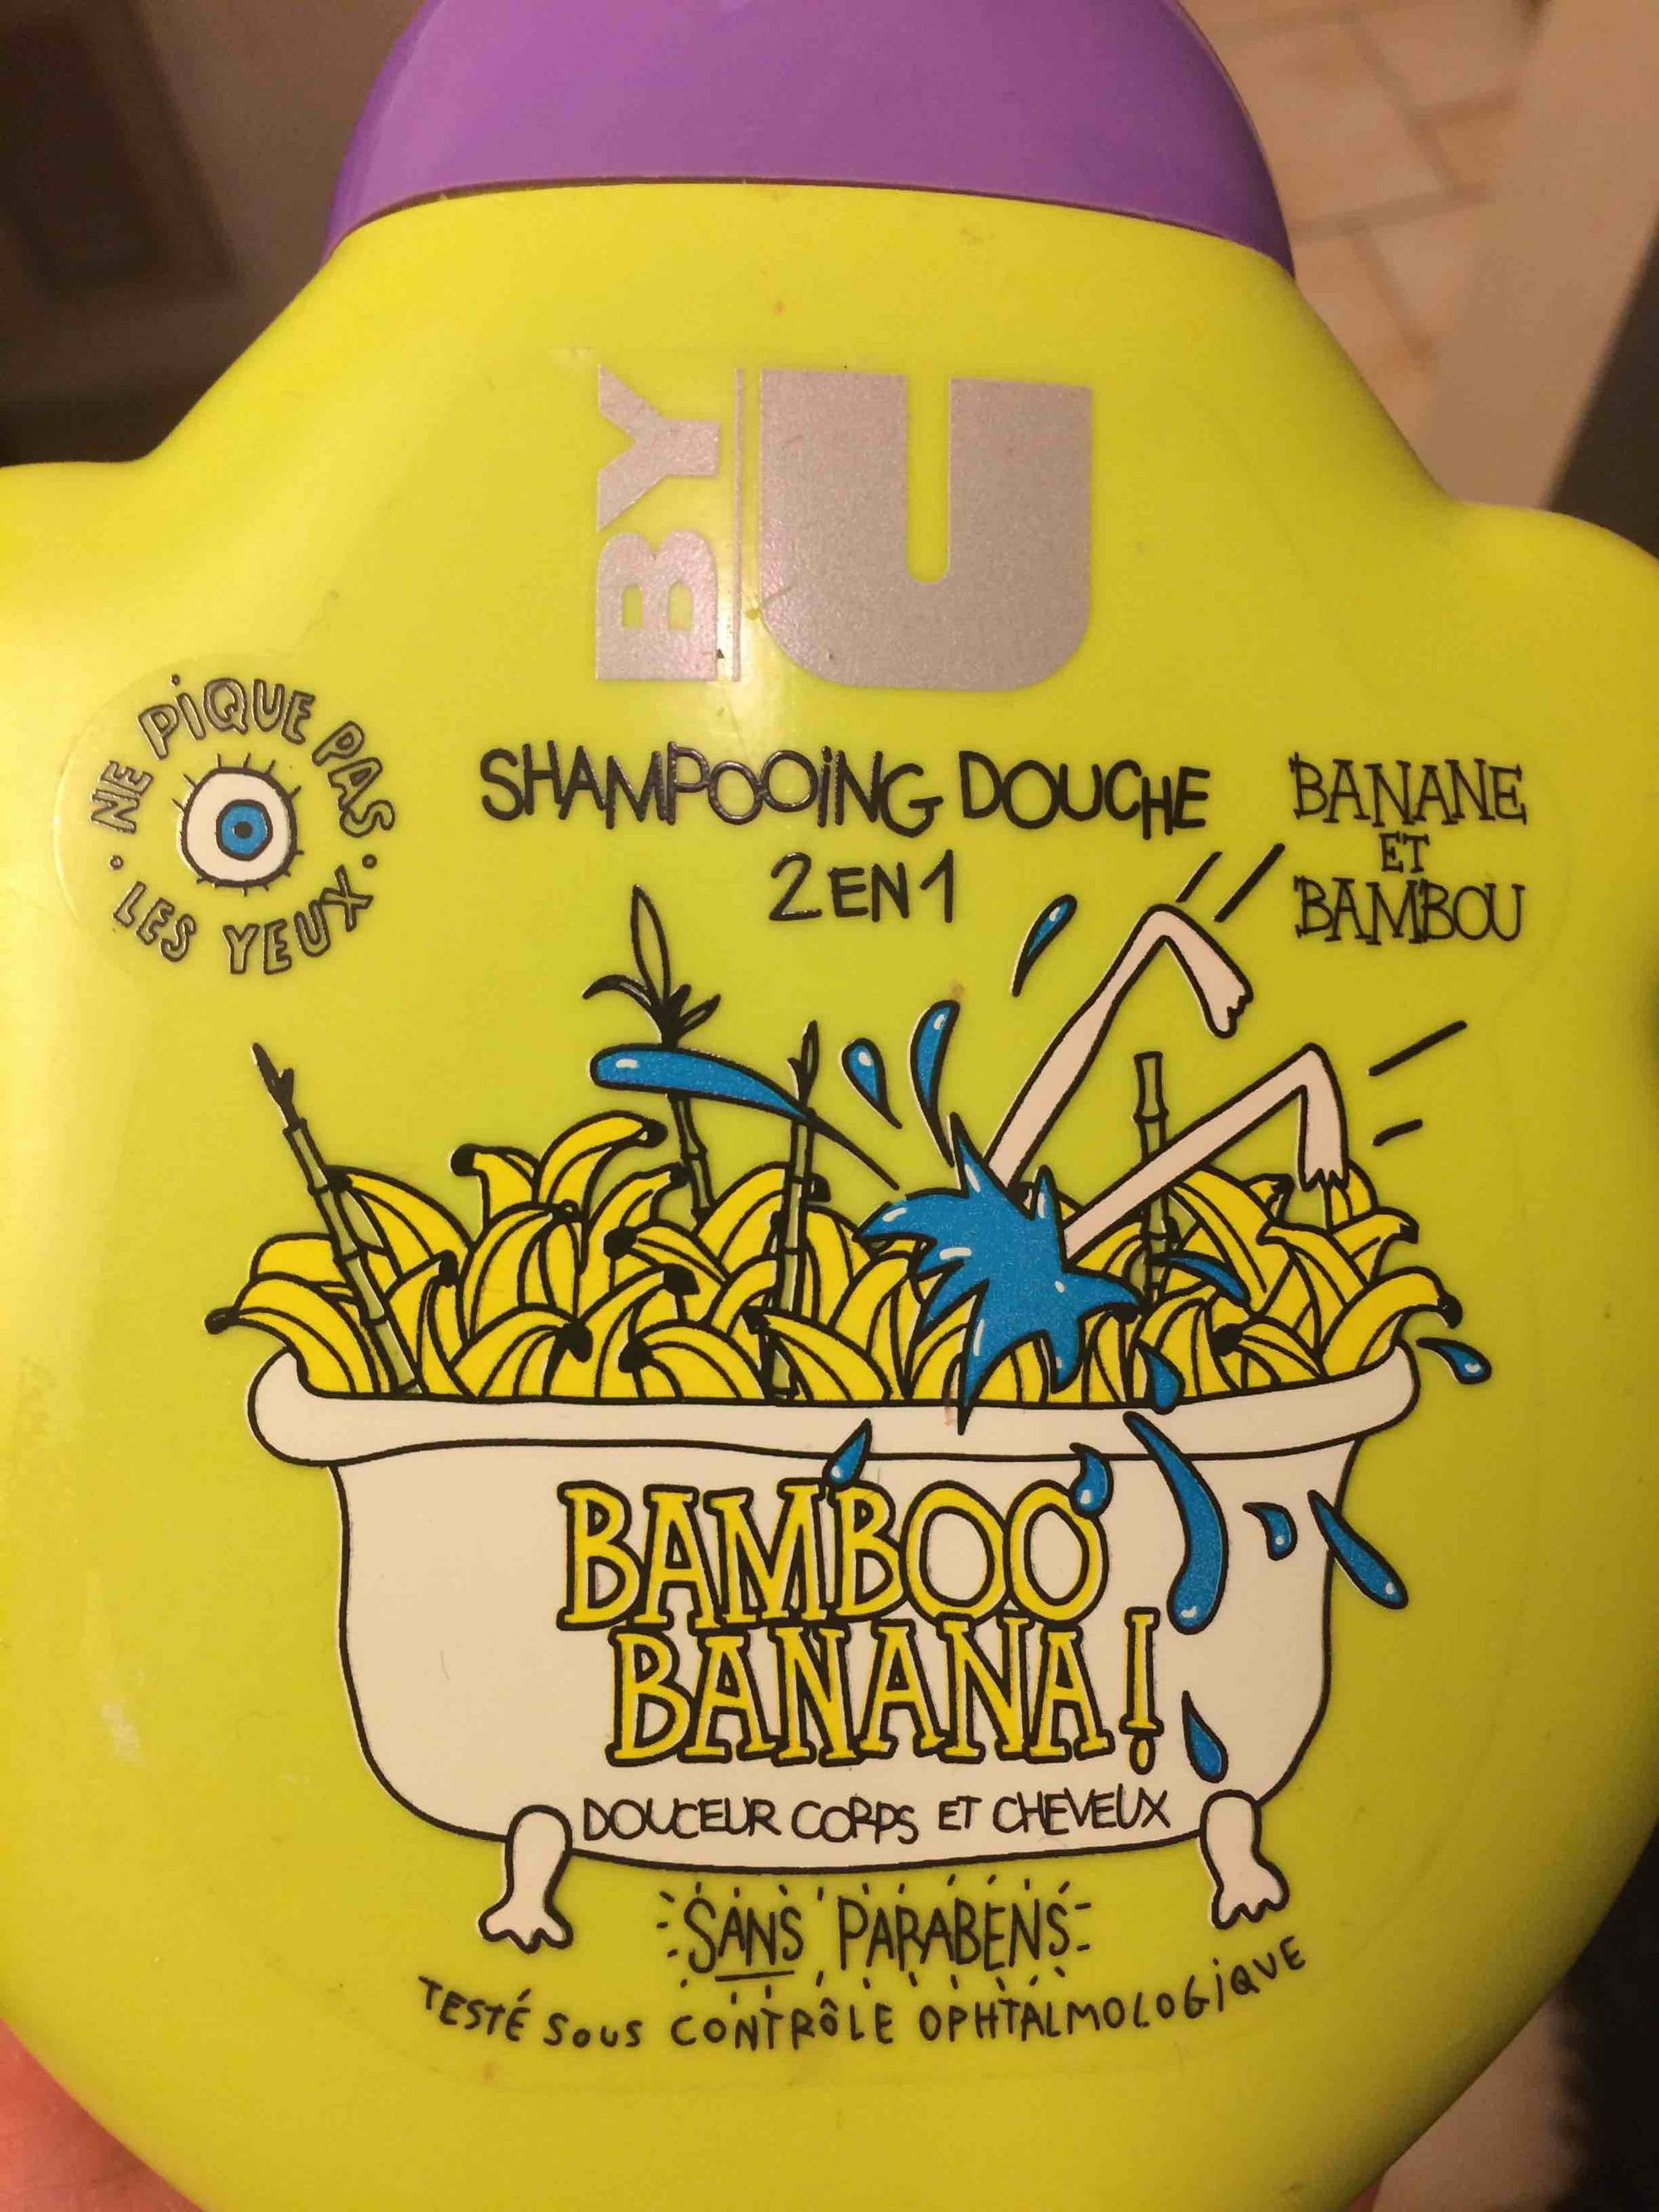 BY U - Bamboo Banana ! - Shampooing douche 2 en 1 - Banane et bambou